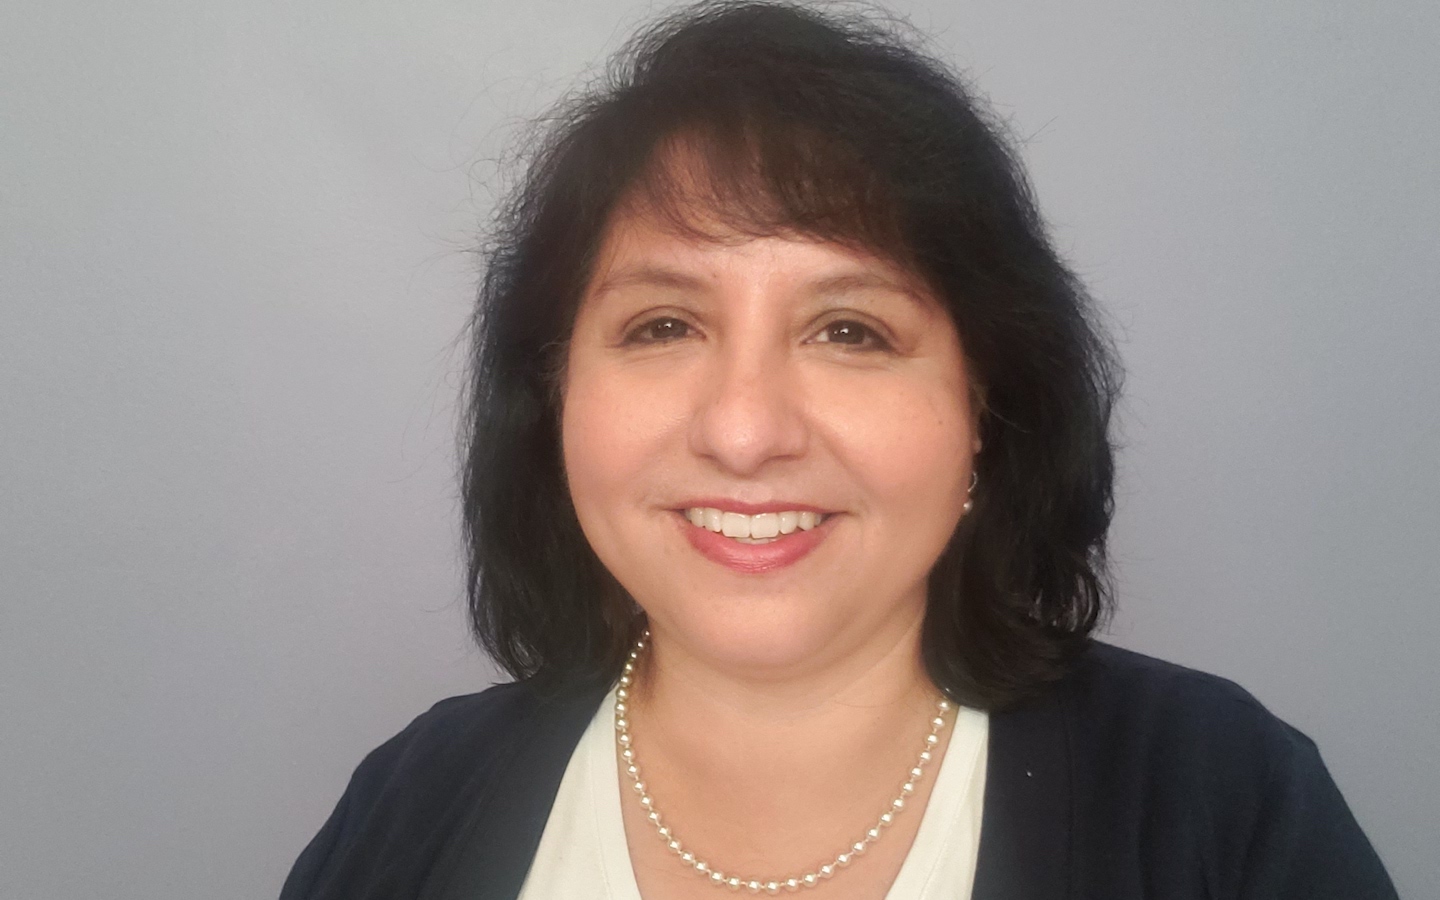 Nursing director Cynthia Gonzalez